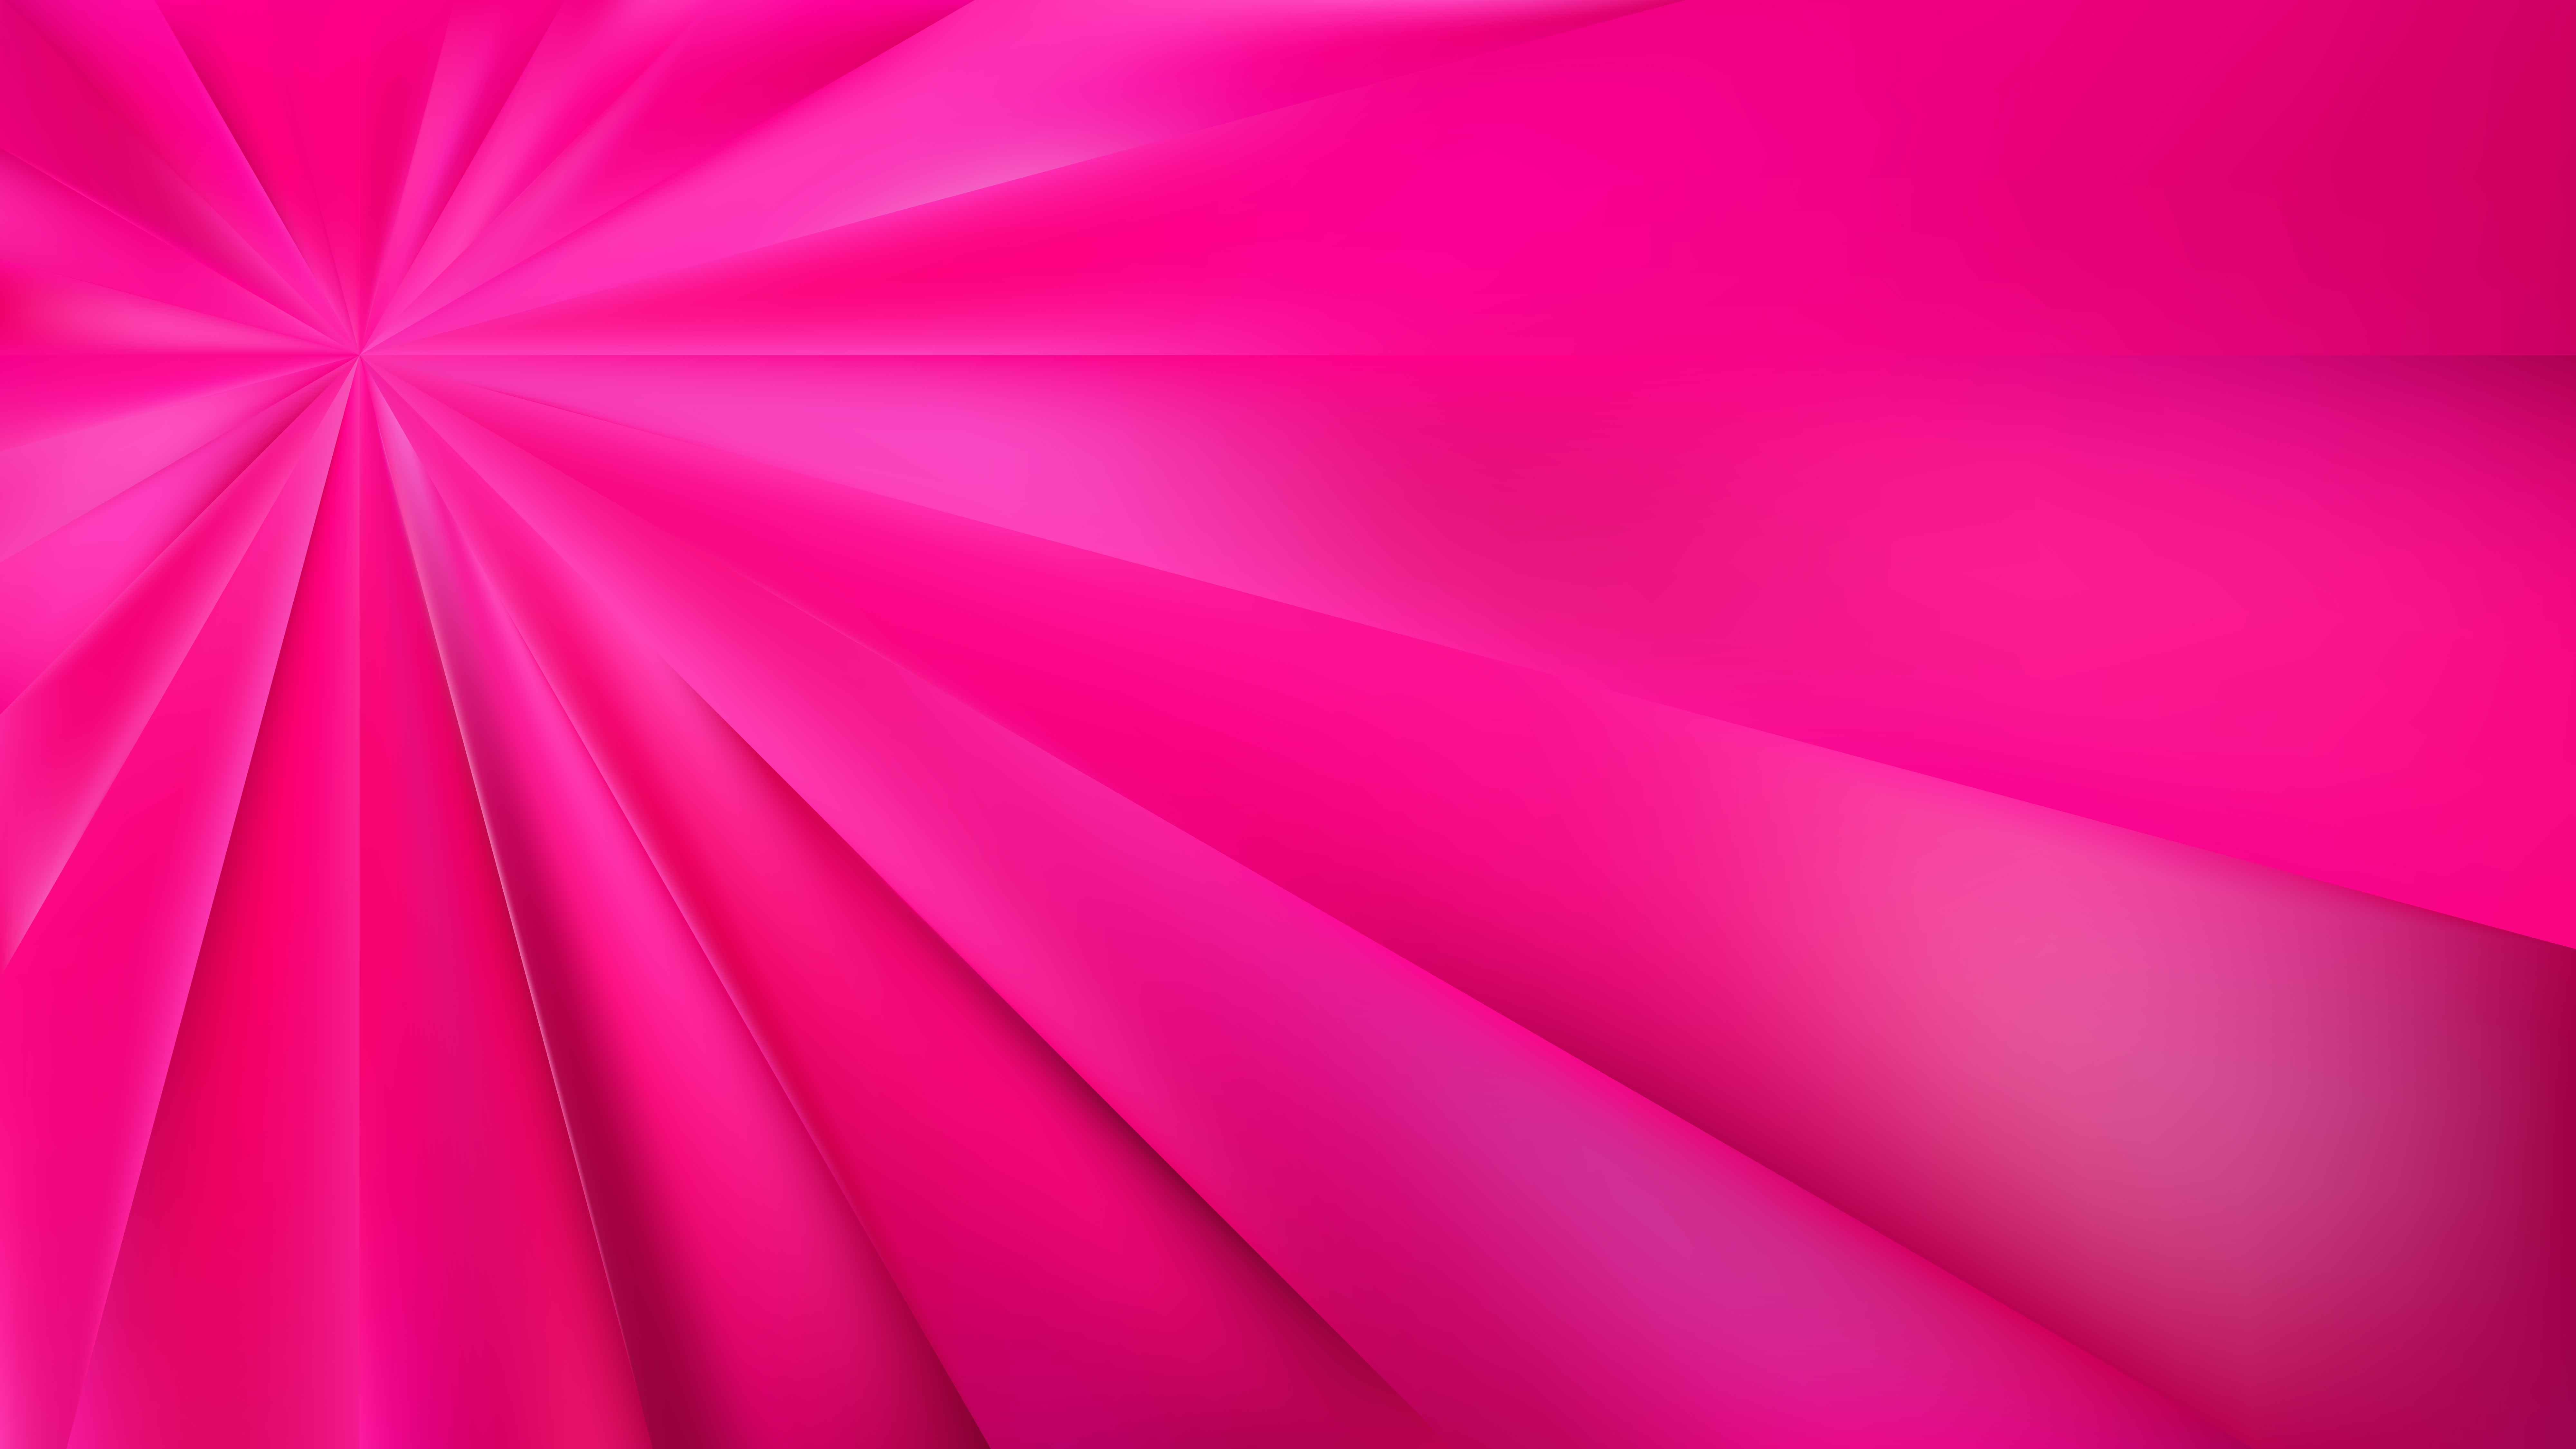 Free Hot Pink Background Illustration